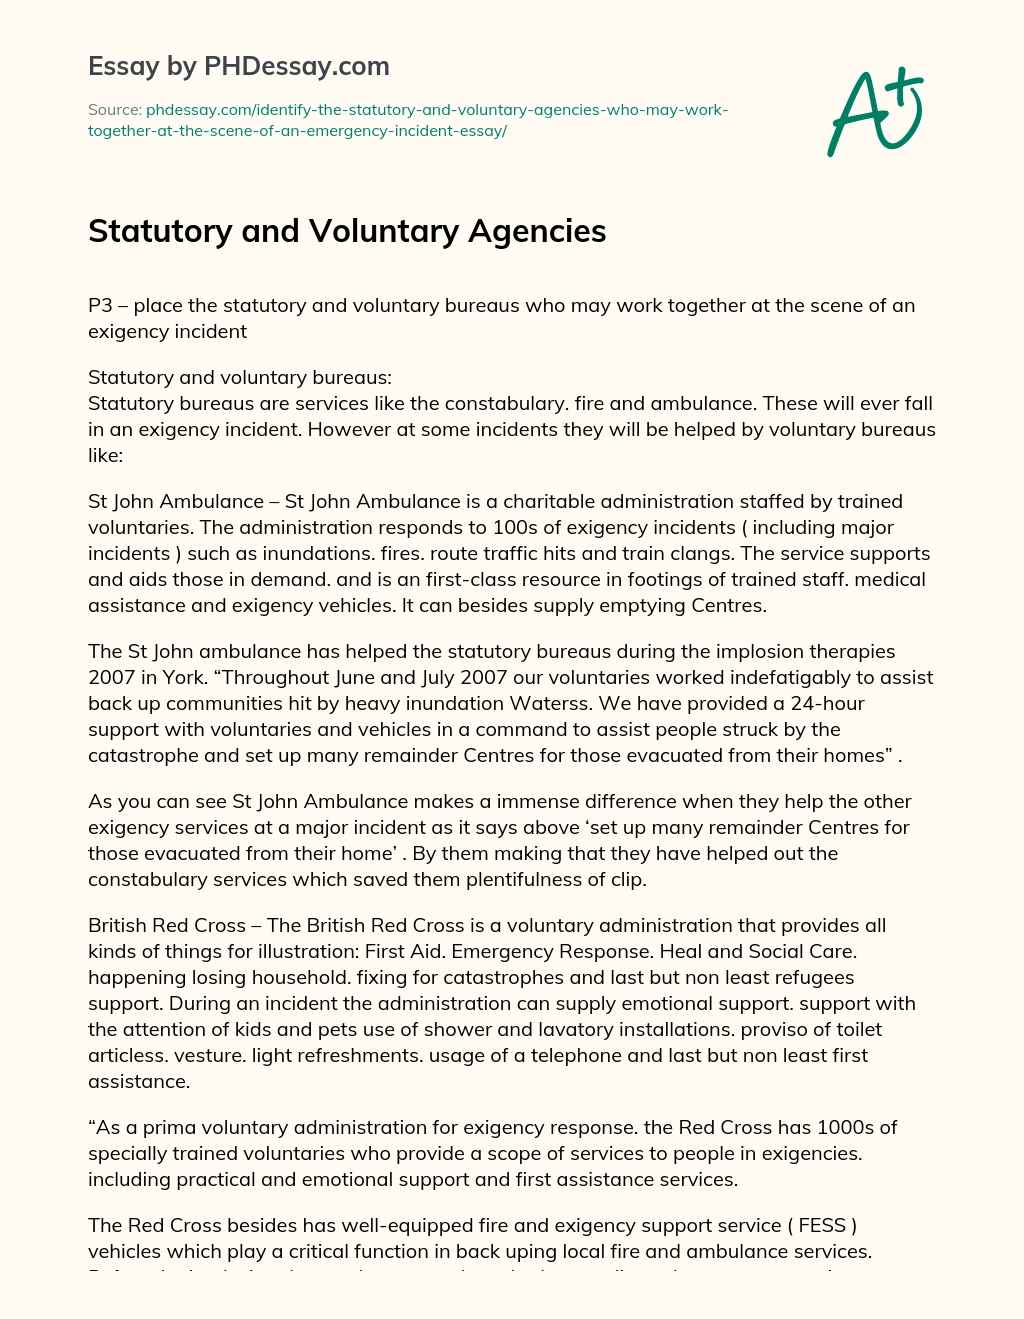 Statutory and Voluntary Agencies essay